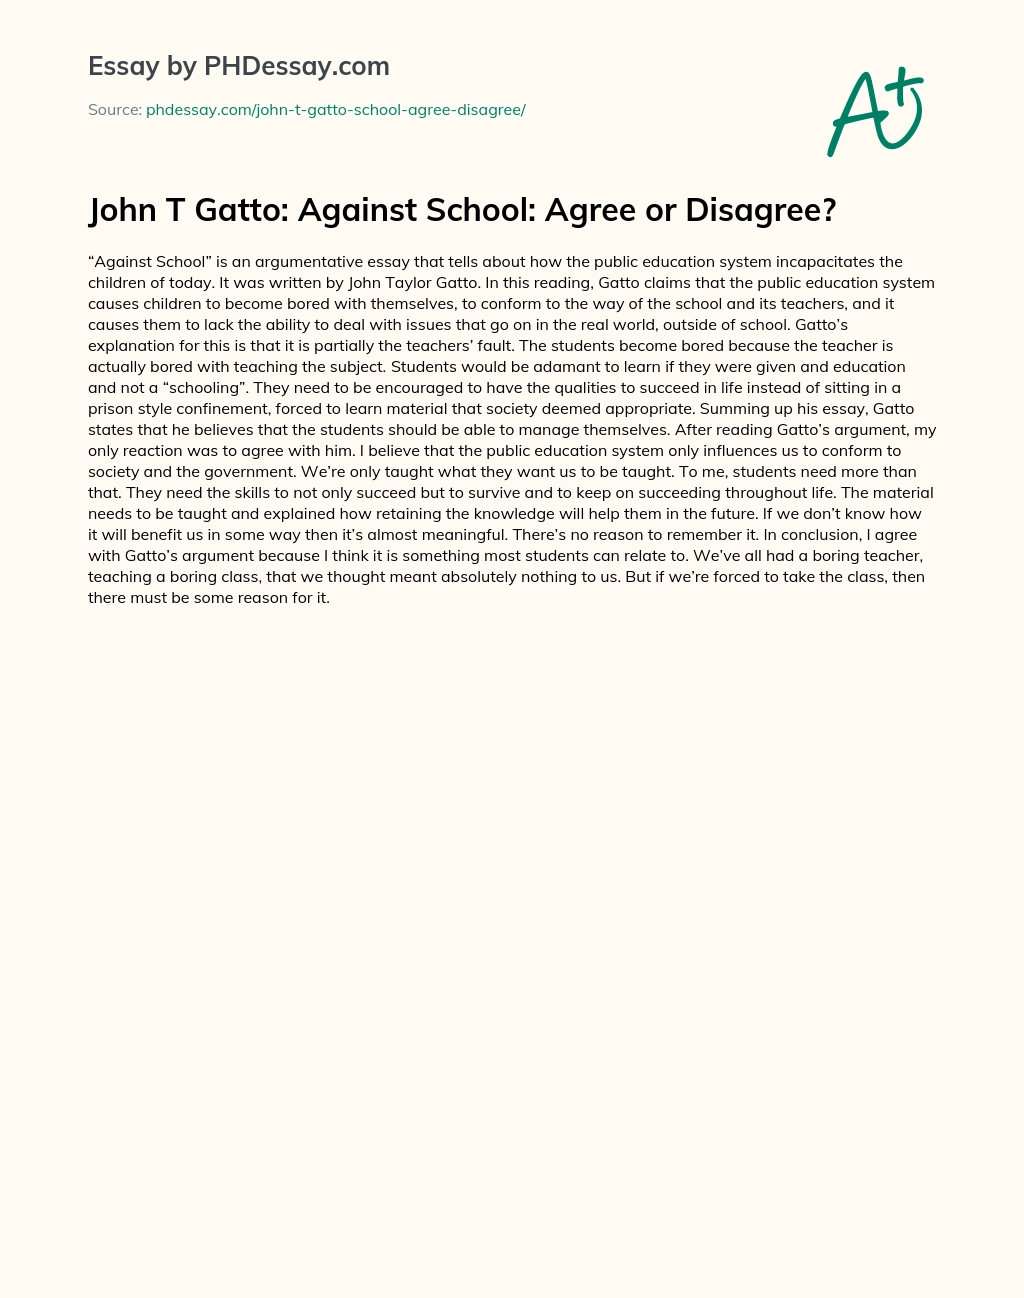 John T Gatto: Against School: Agree or Disagree? essay